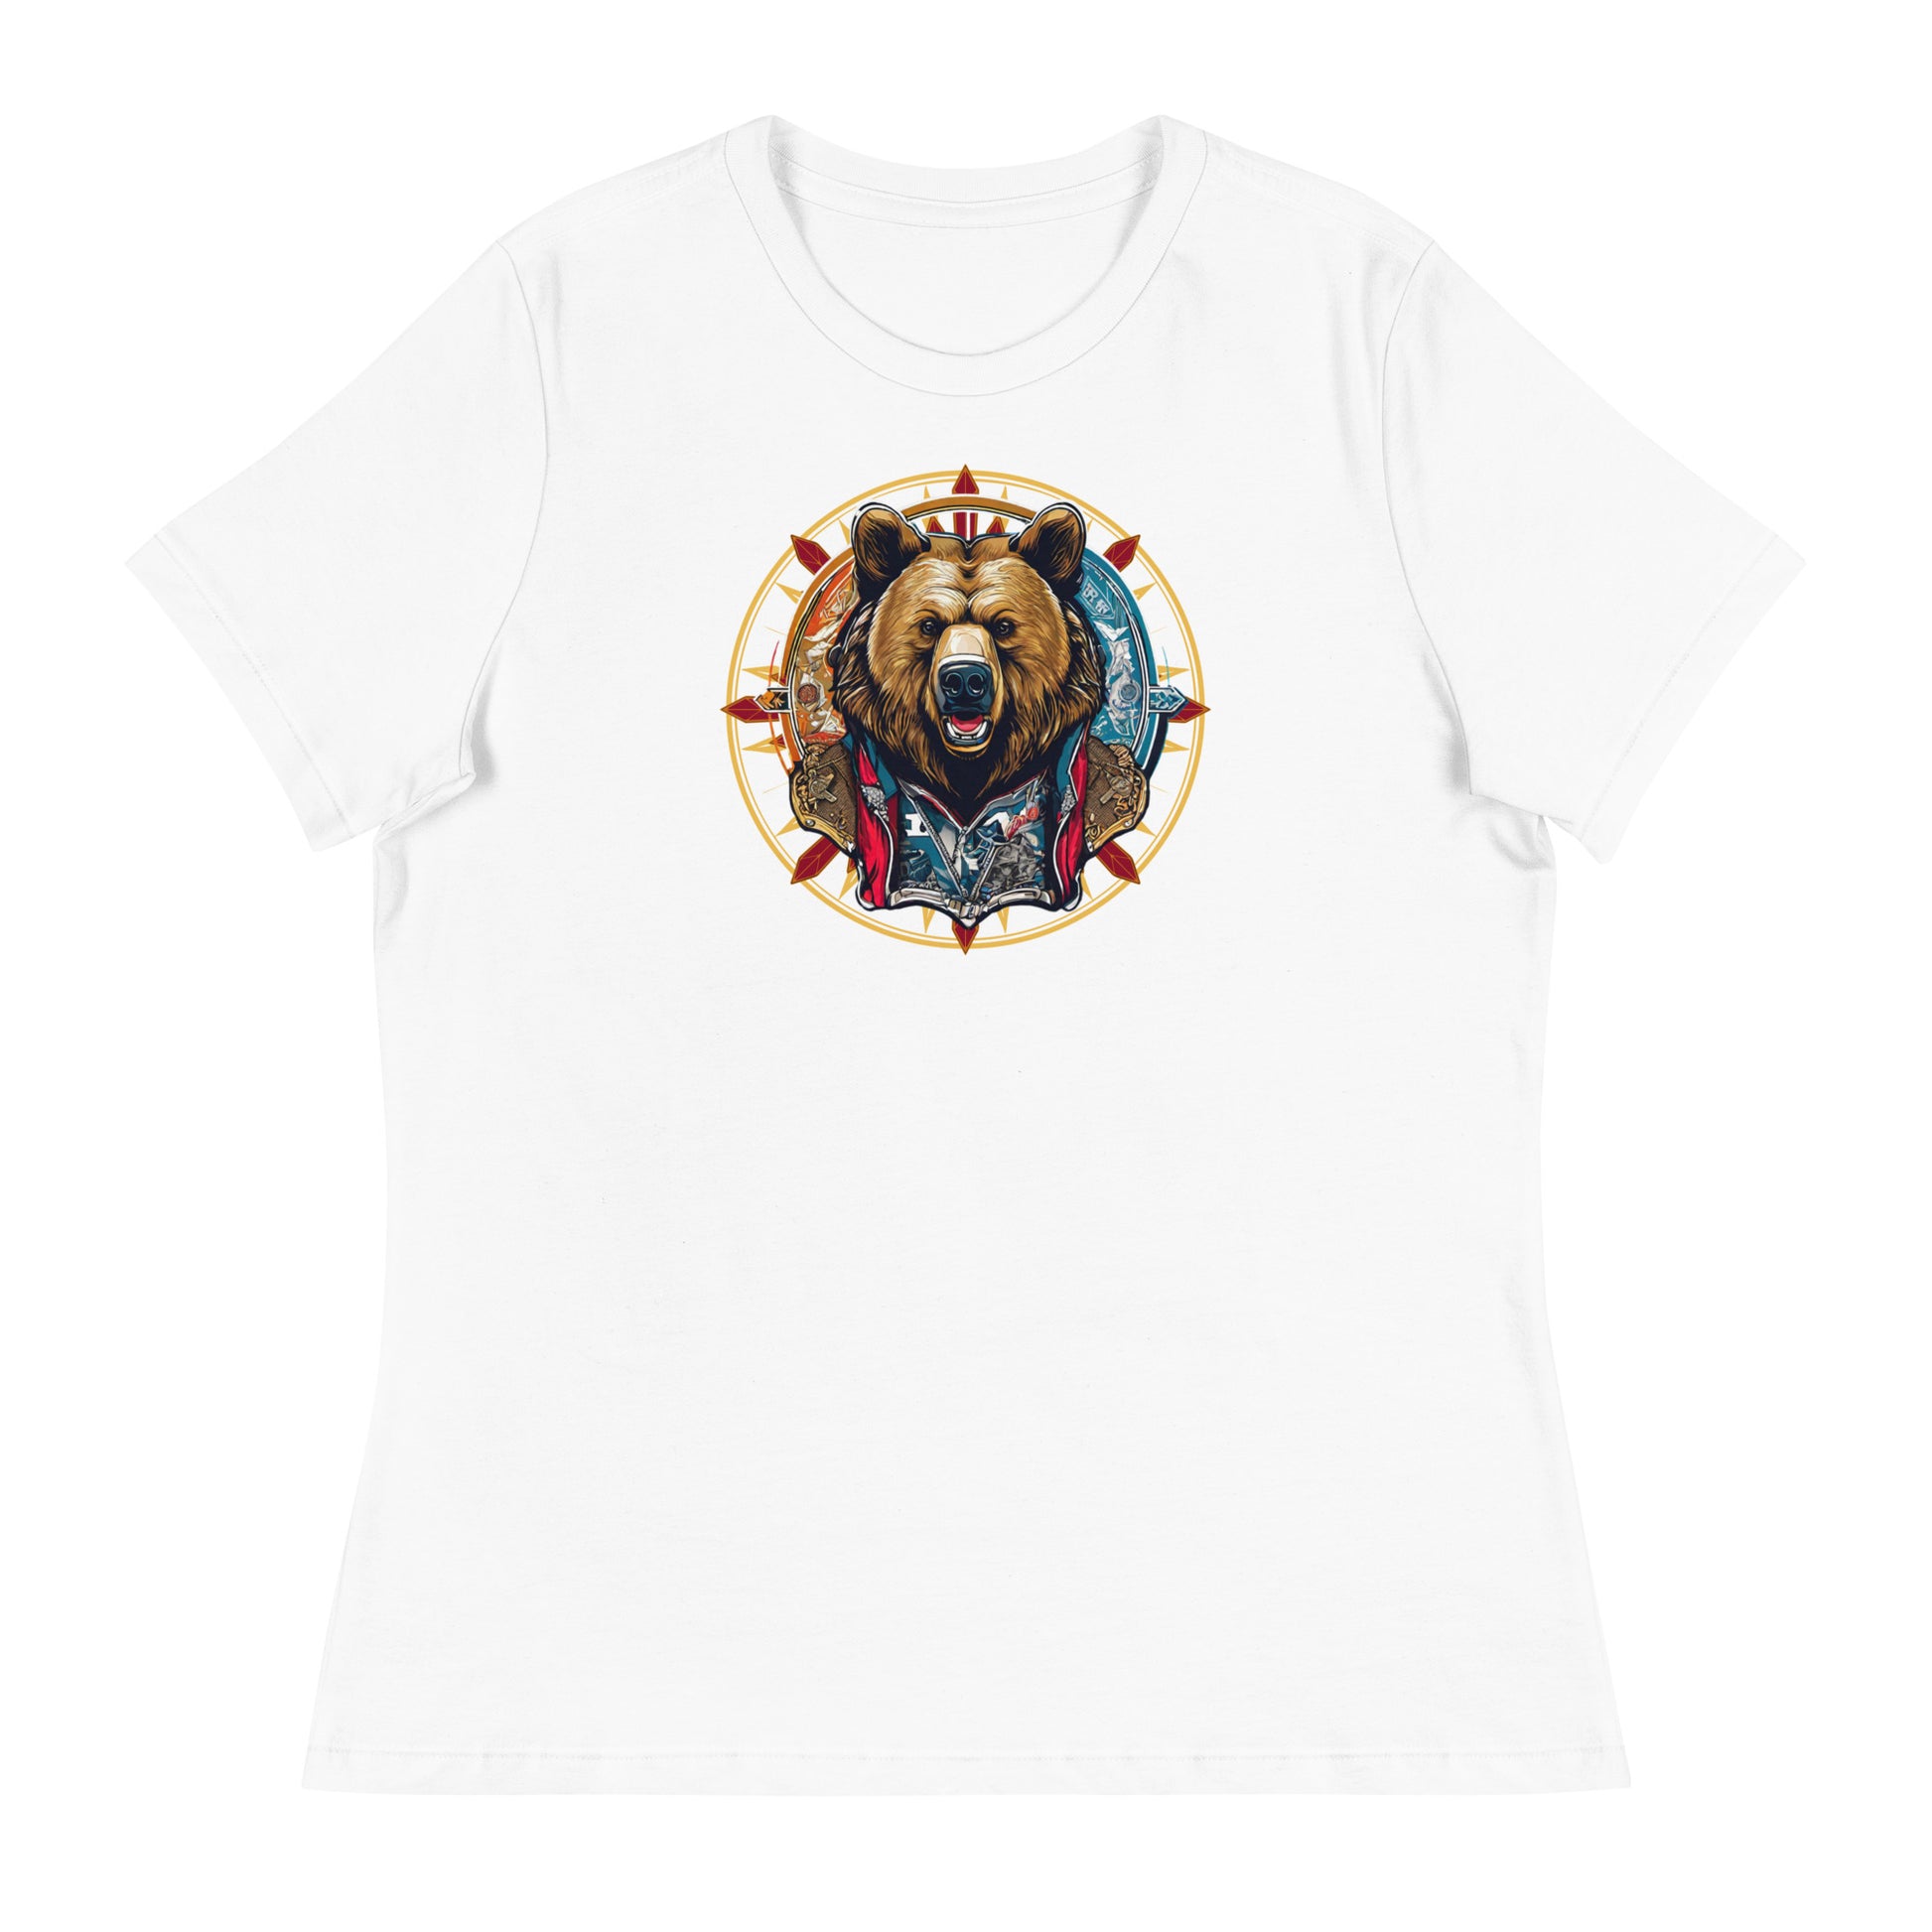 Bear Emblem Women's Graphic T-Shirt White